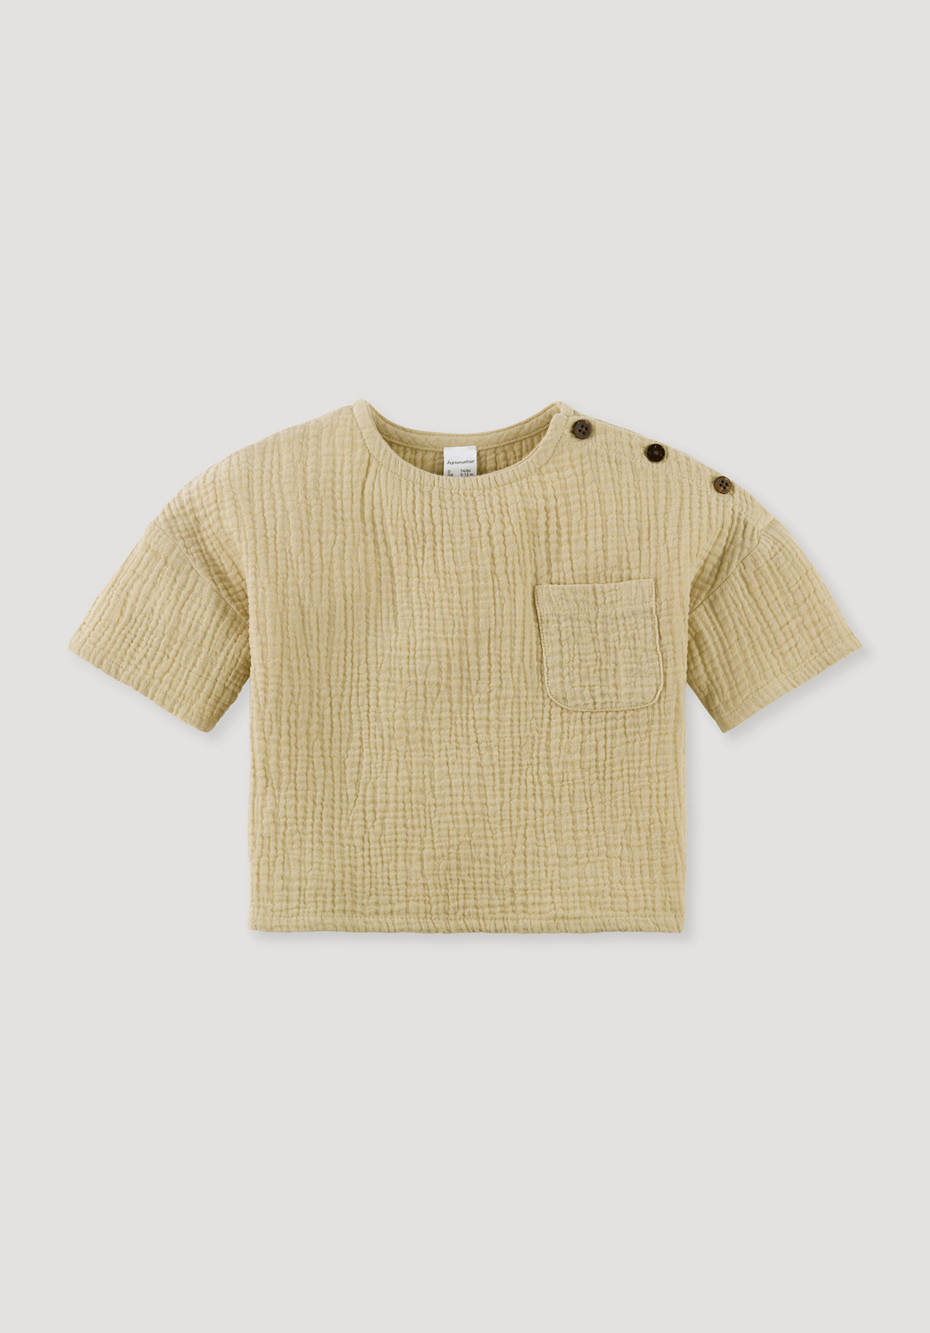 Muslin shirt made of pure organic cotton